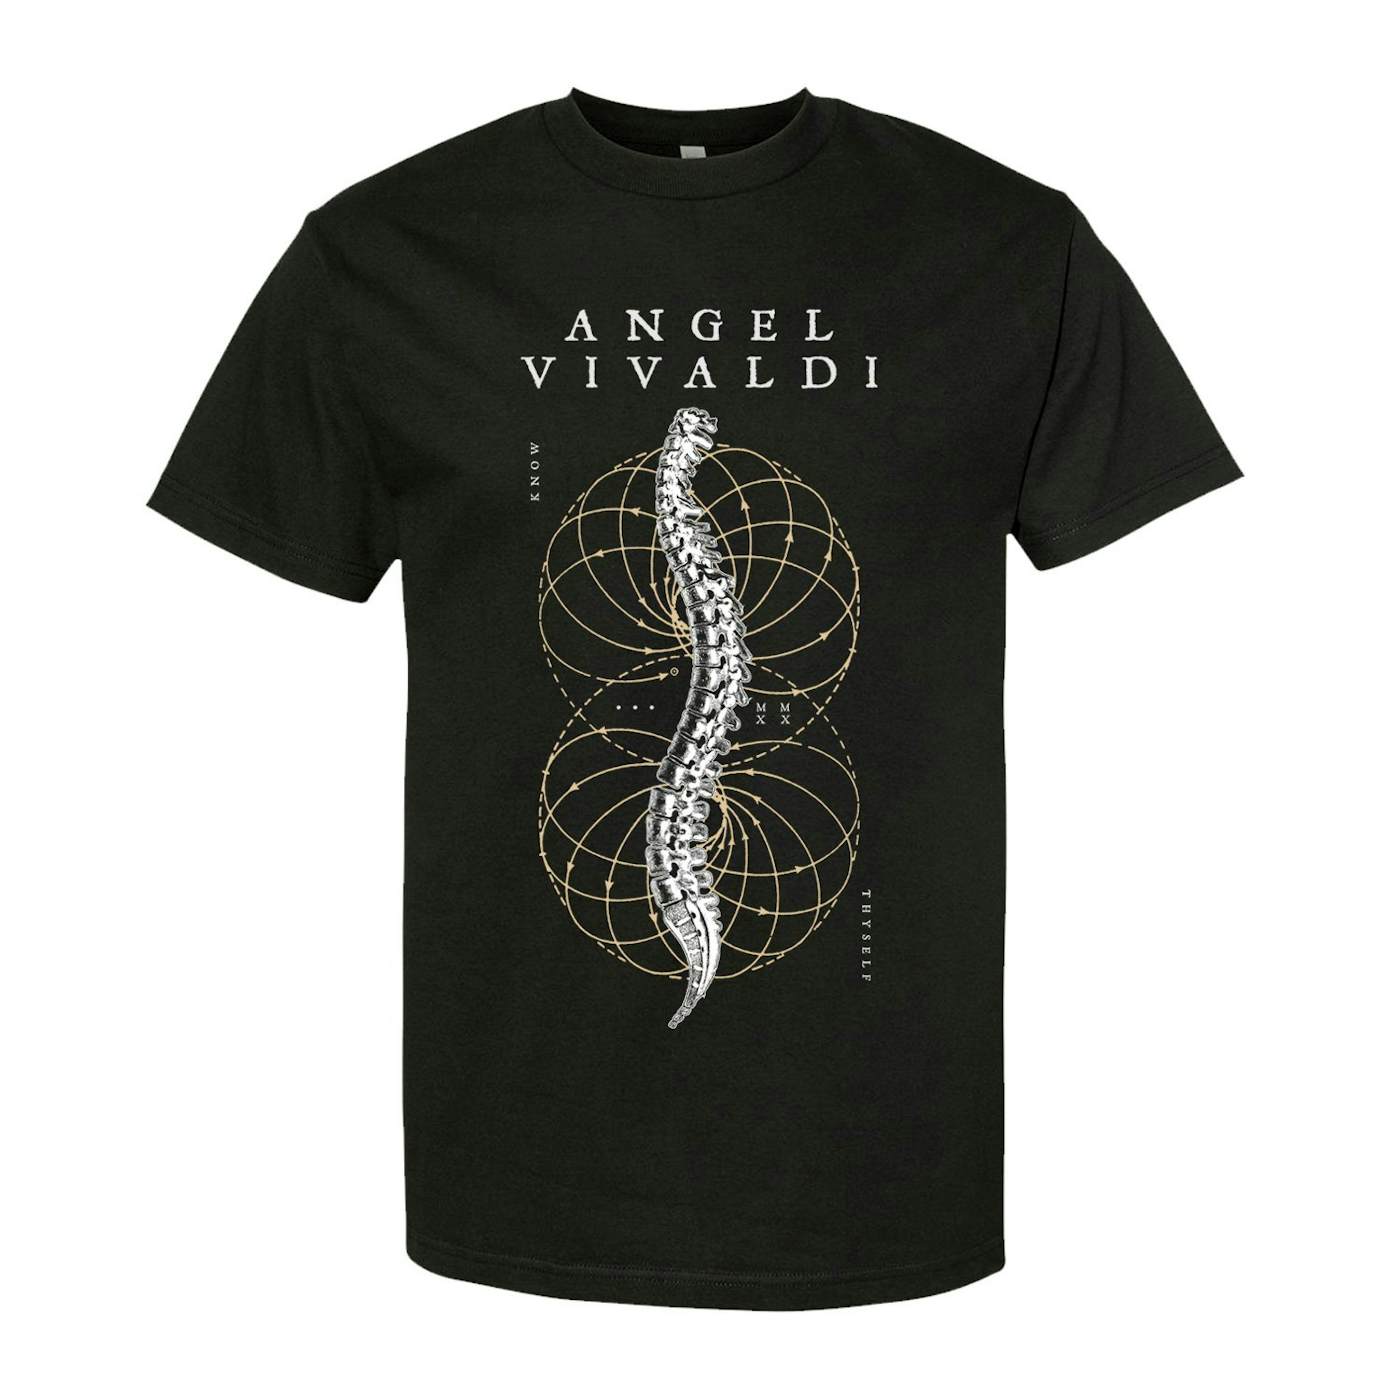 Angel Vivaldi "Spinal Tap" T-Shirt